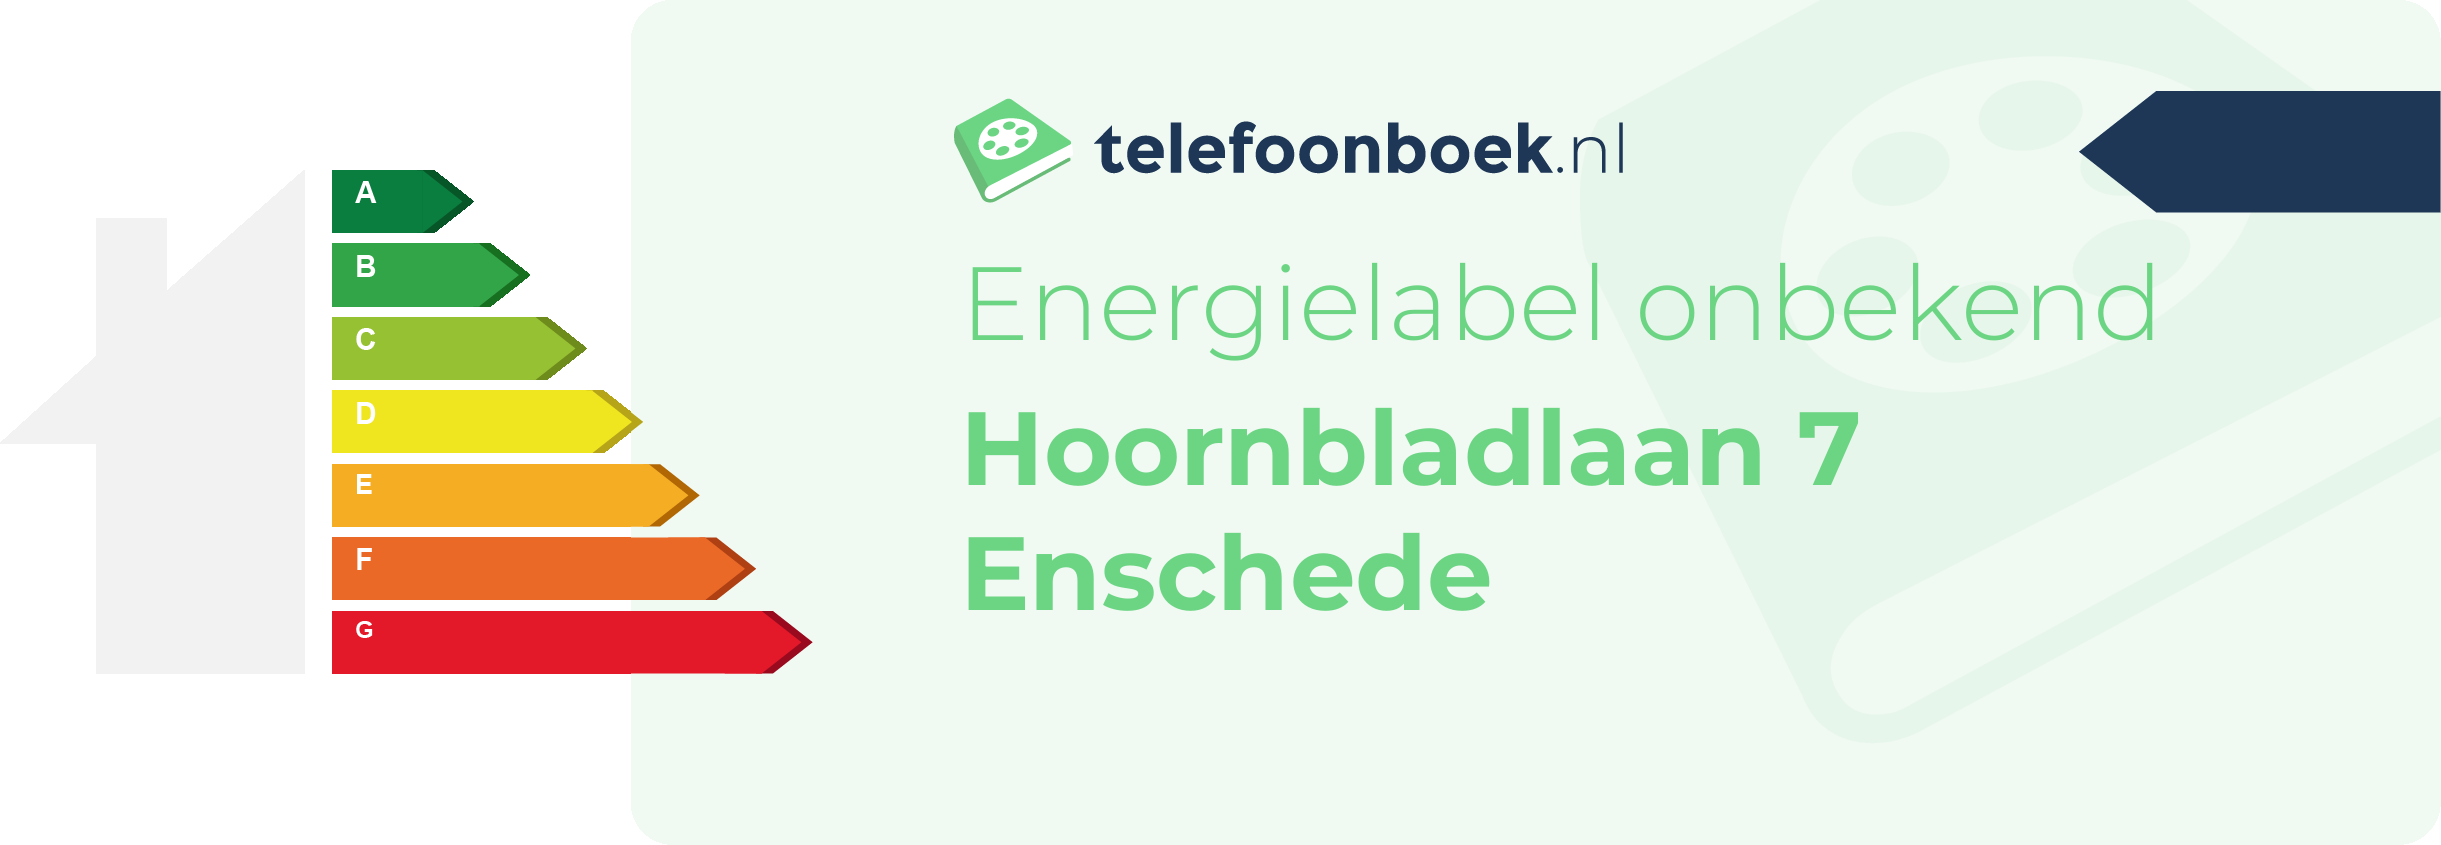 Energielabel Hoornbladlaan 7 Enschede